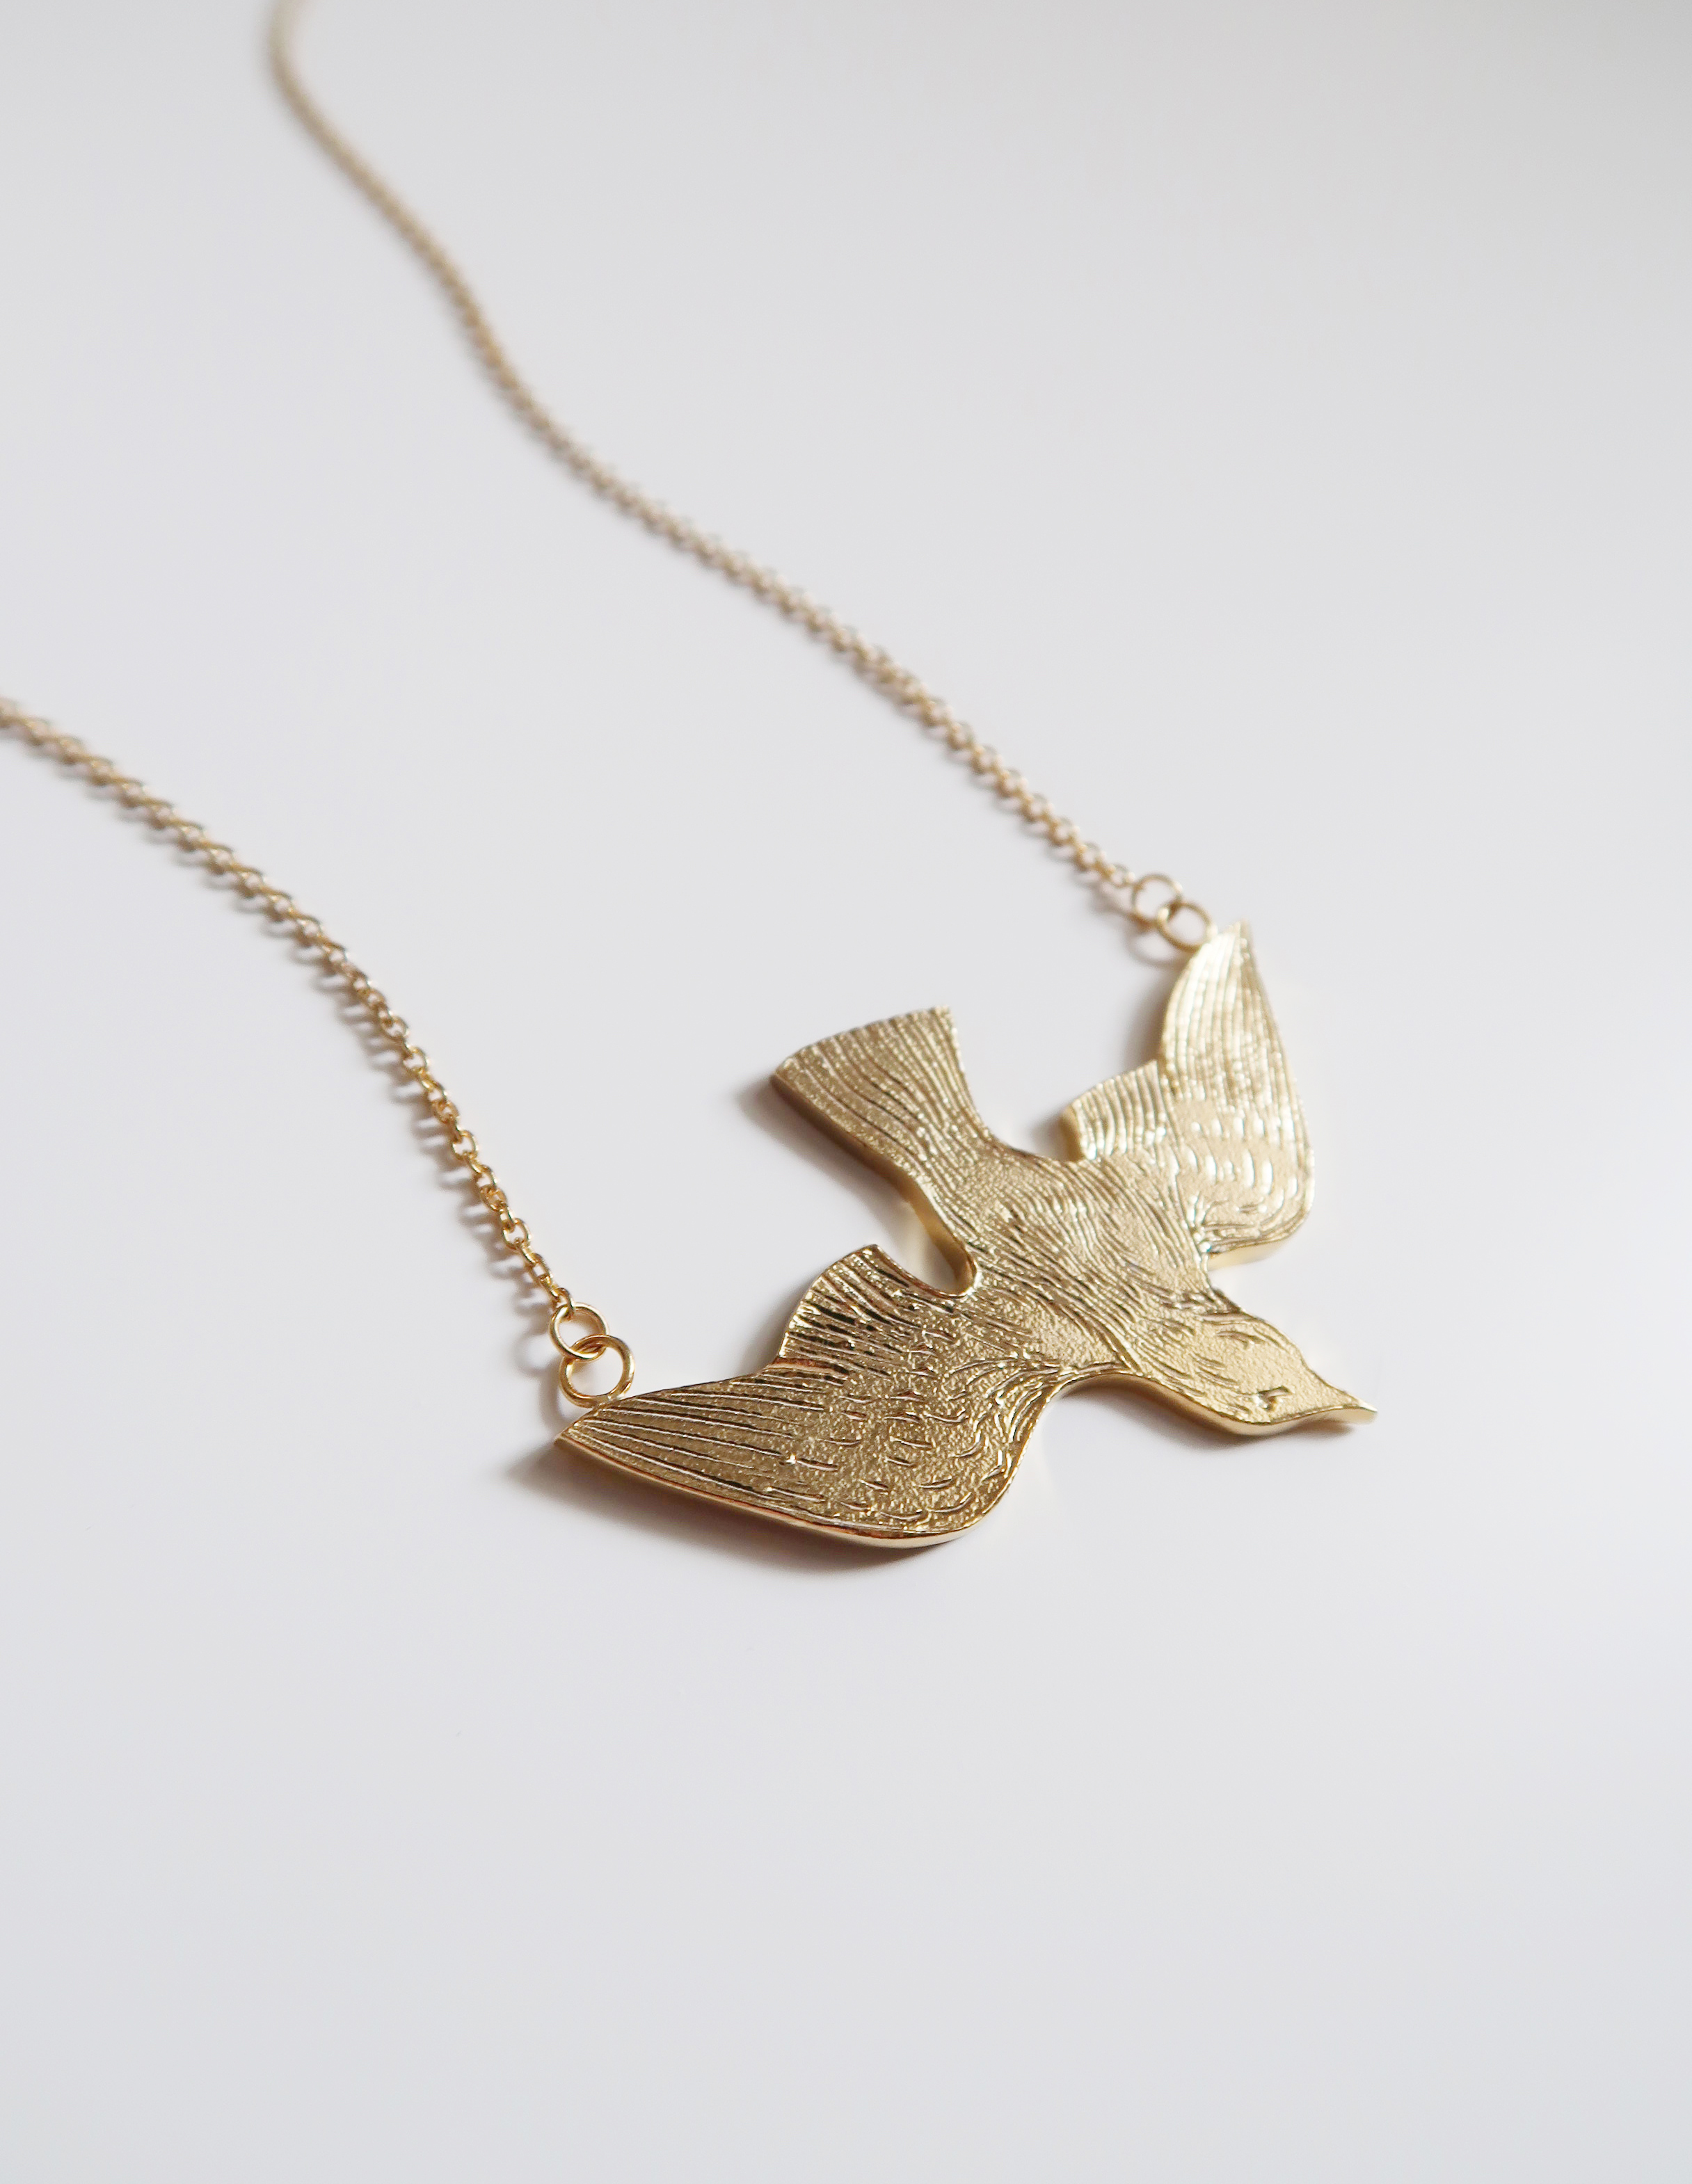 Soaring Gold Bird Necklace  14k Gold  Bird Necklace  Bird Jewelry   bird pendant  birthday gift